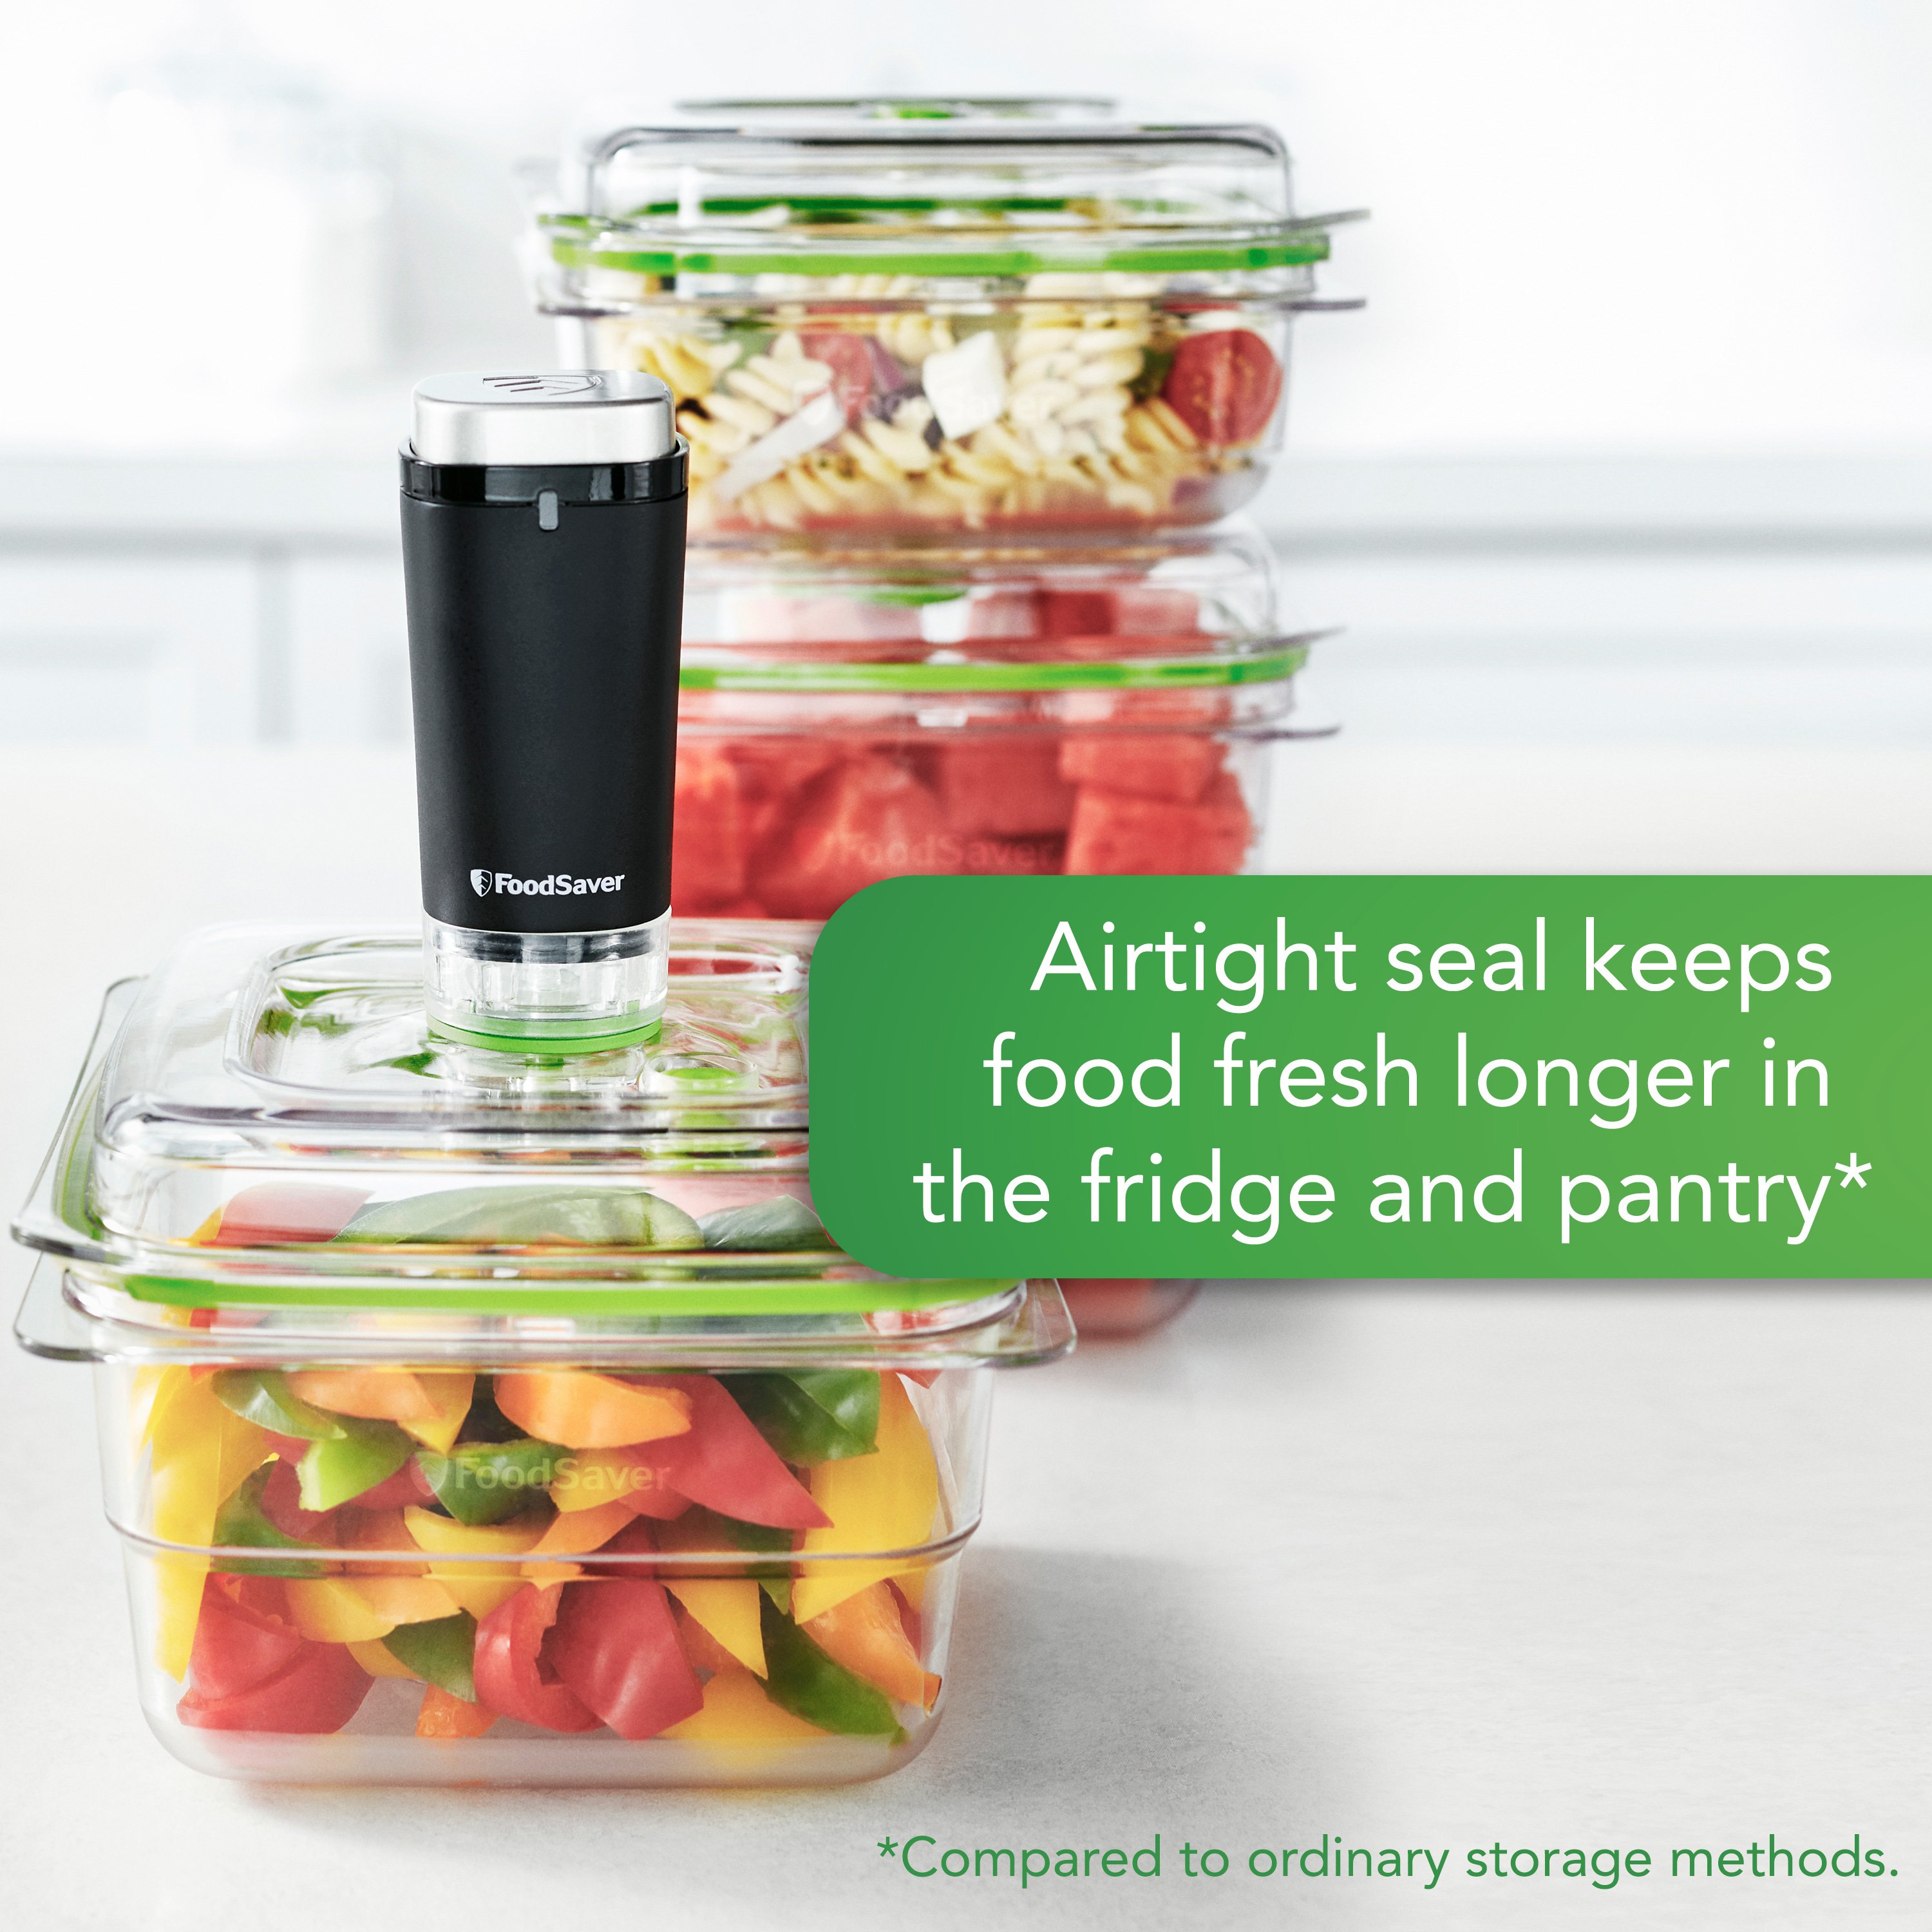 Handheld mini Food Vacuum sealer keeps food fresh and saves